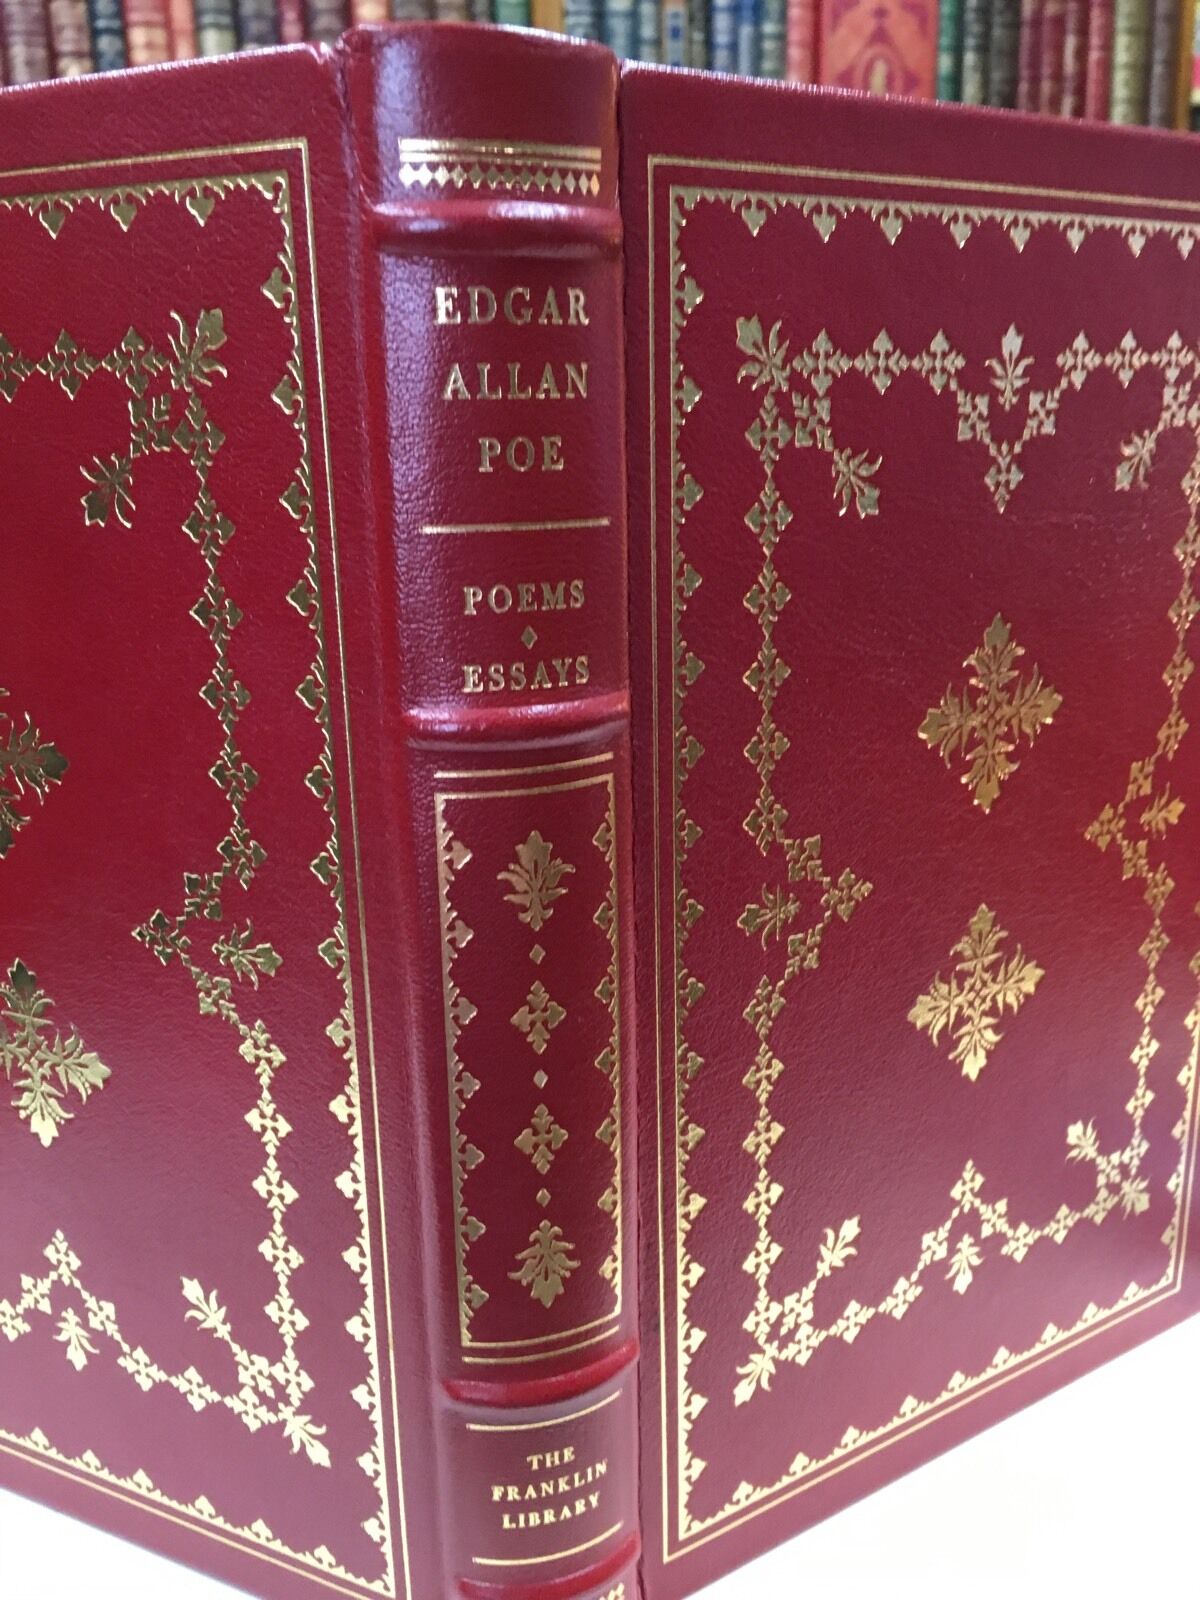 Franklin Library: The Raven: Annabel Lee: Edgar Allan Poe: Poems